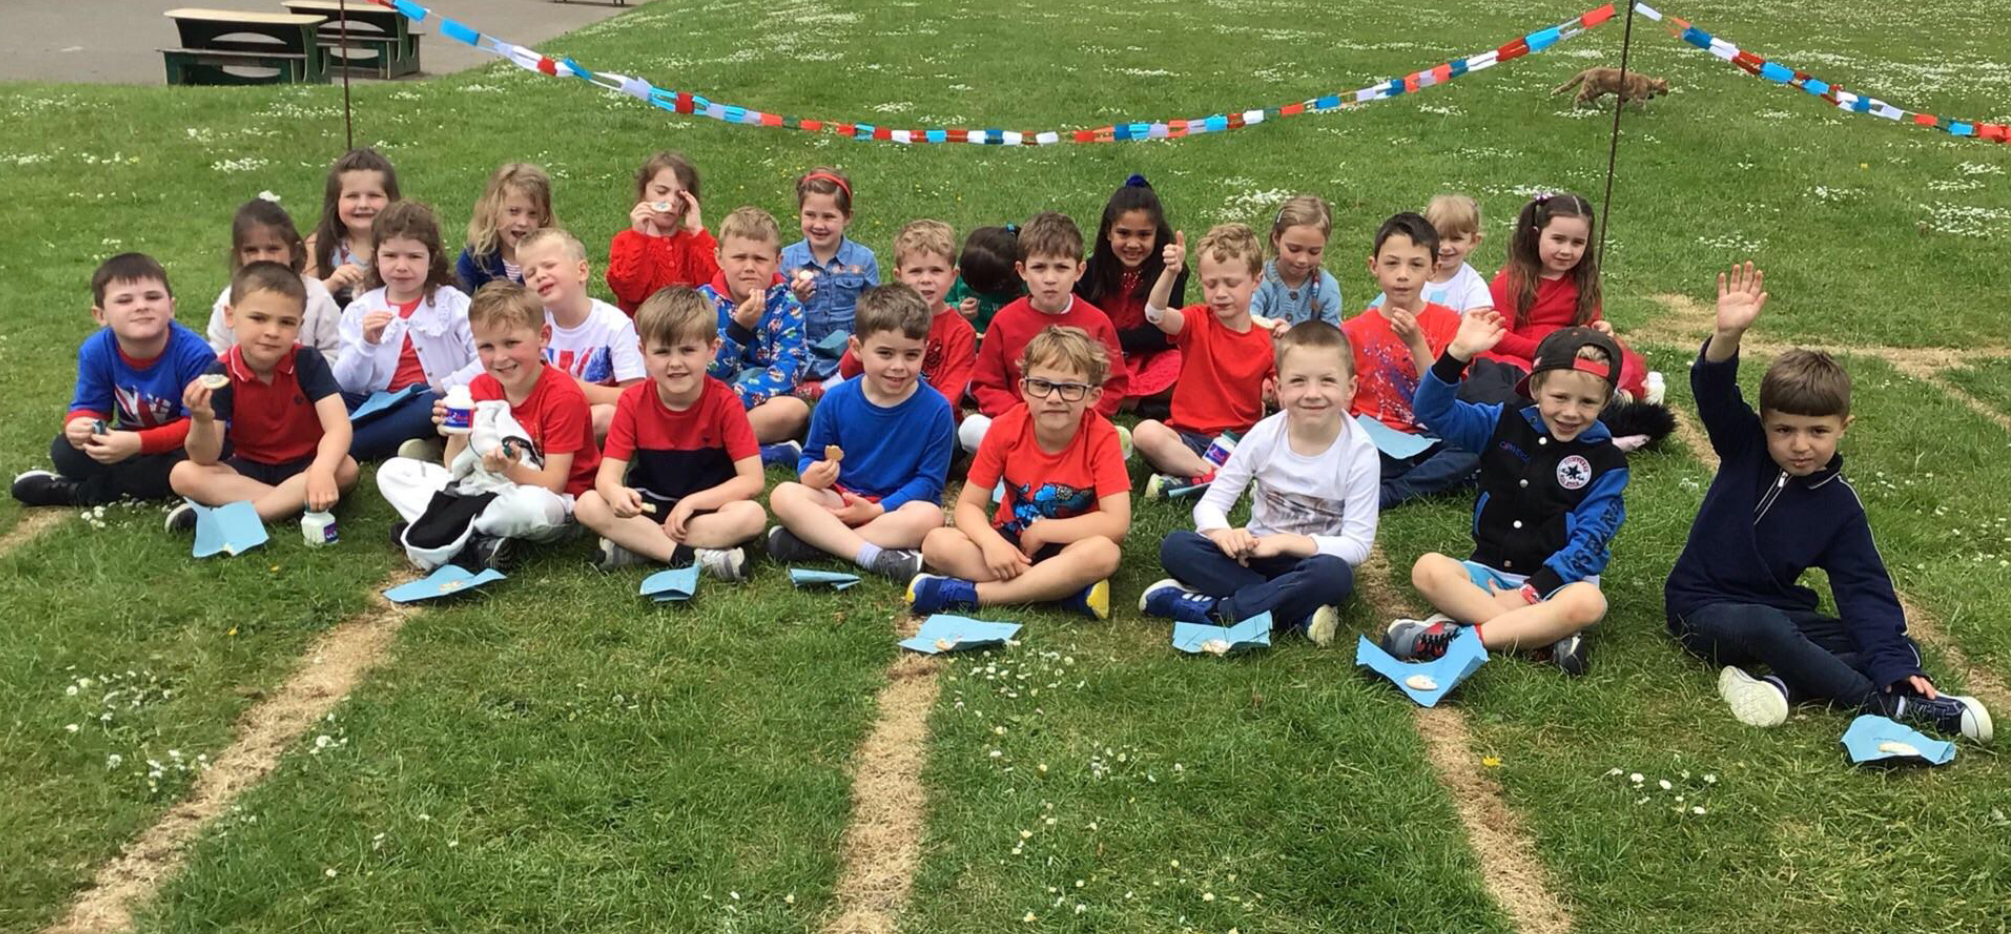 Pupils at Ysgol Mynydd Isa during their Jubilee celebrations.